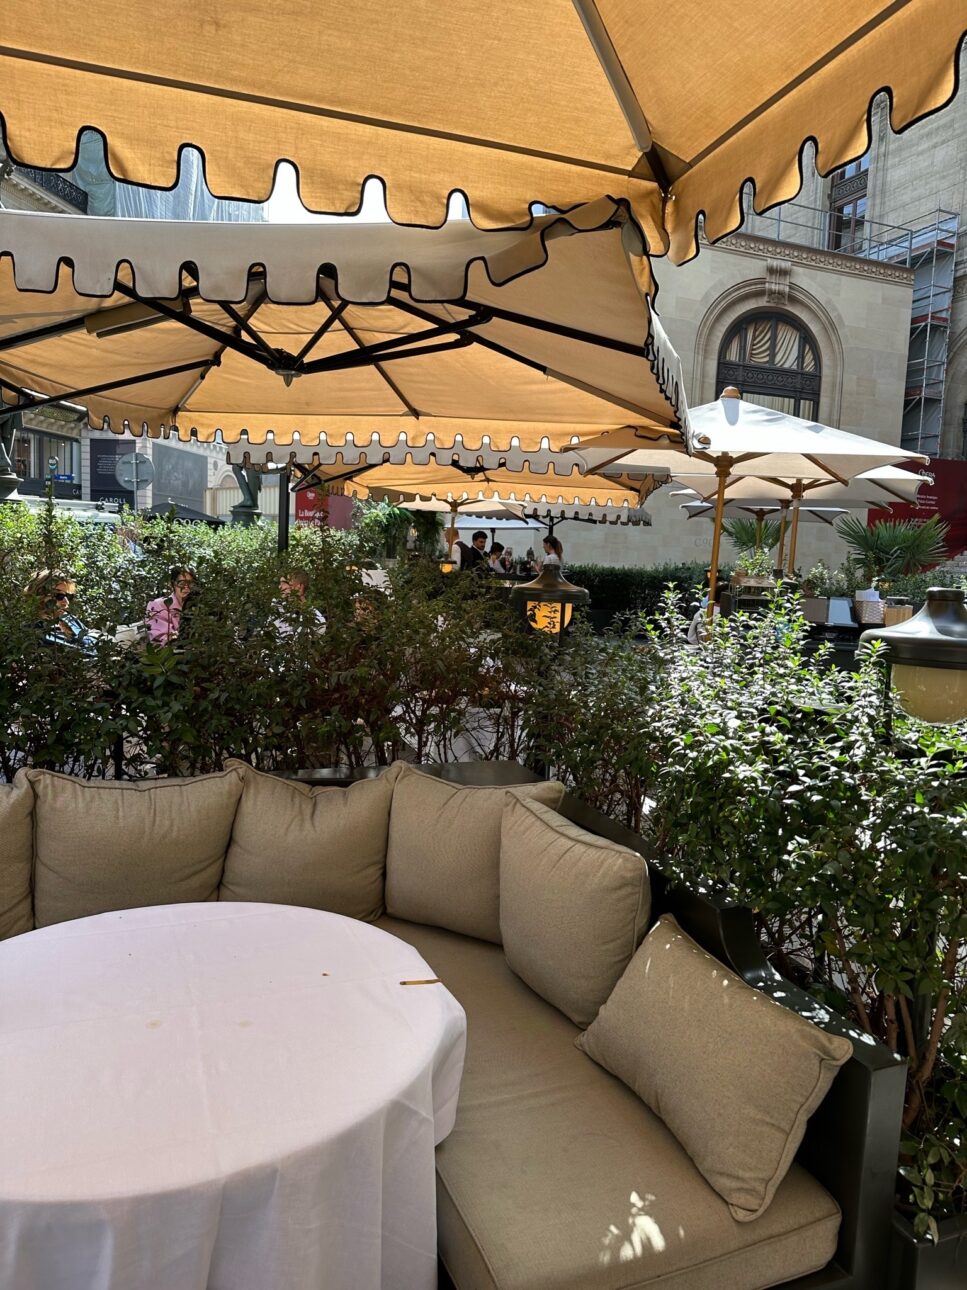 Best Restaurants in Paris